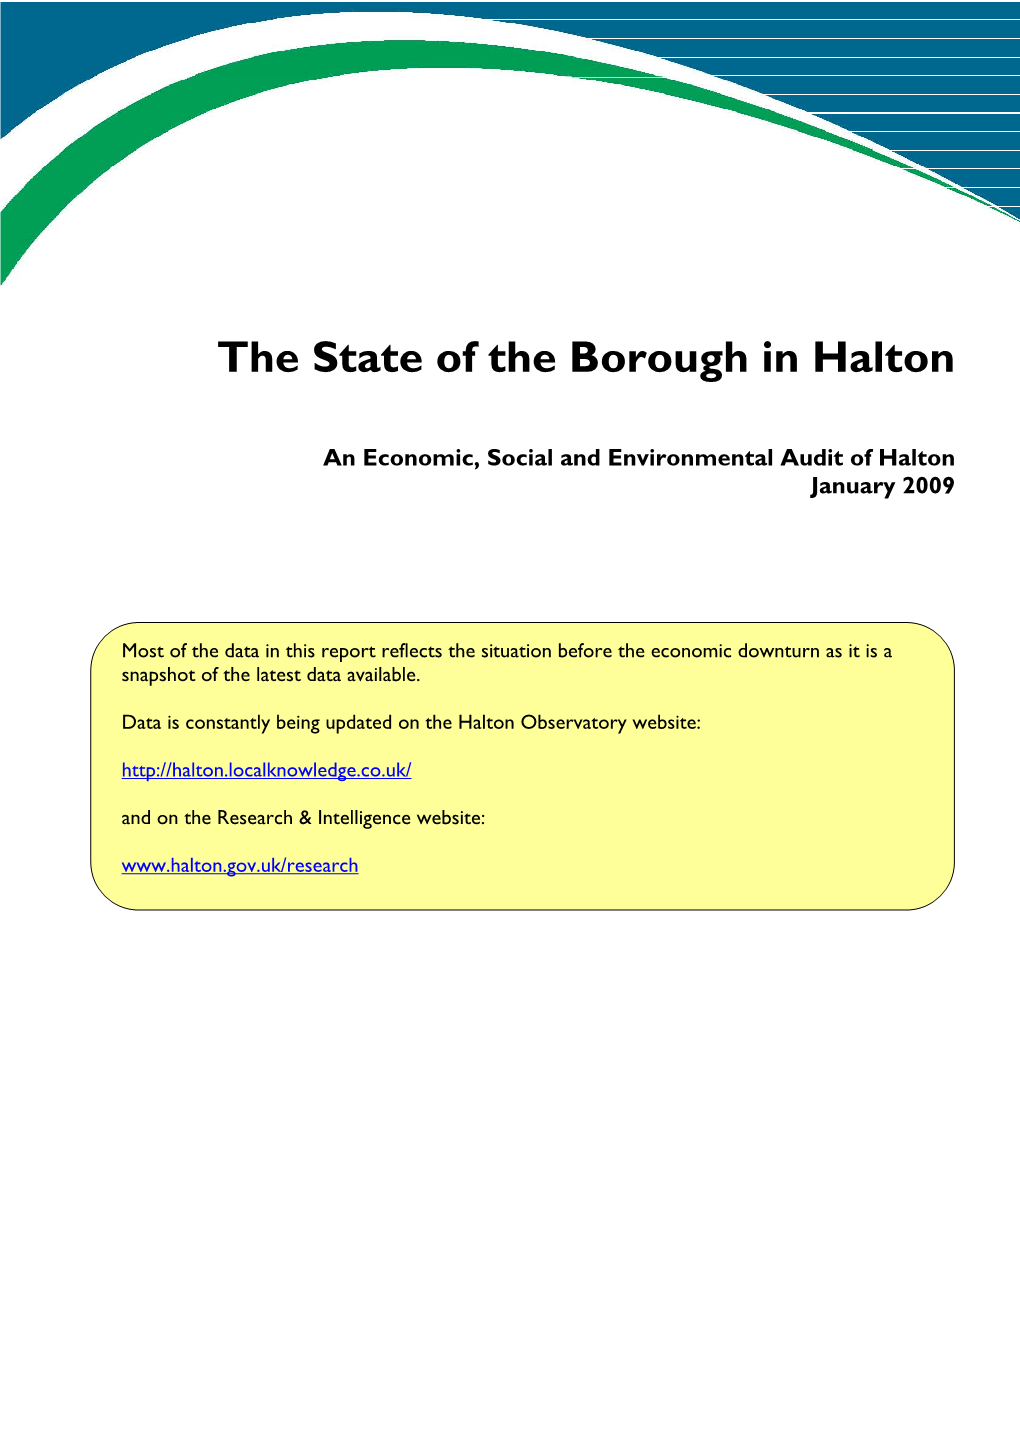 The State of the Borough in Halton